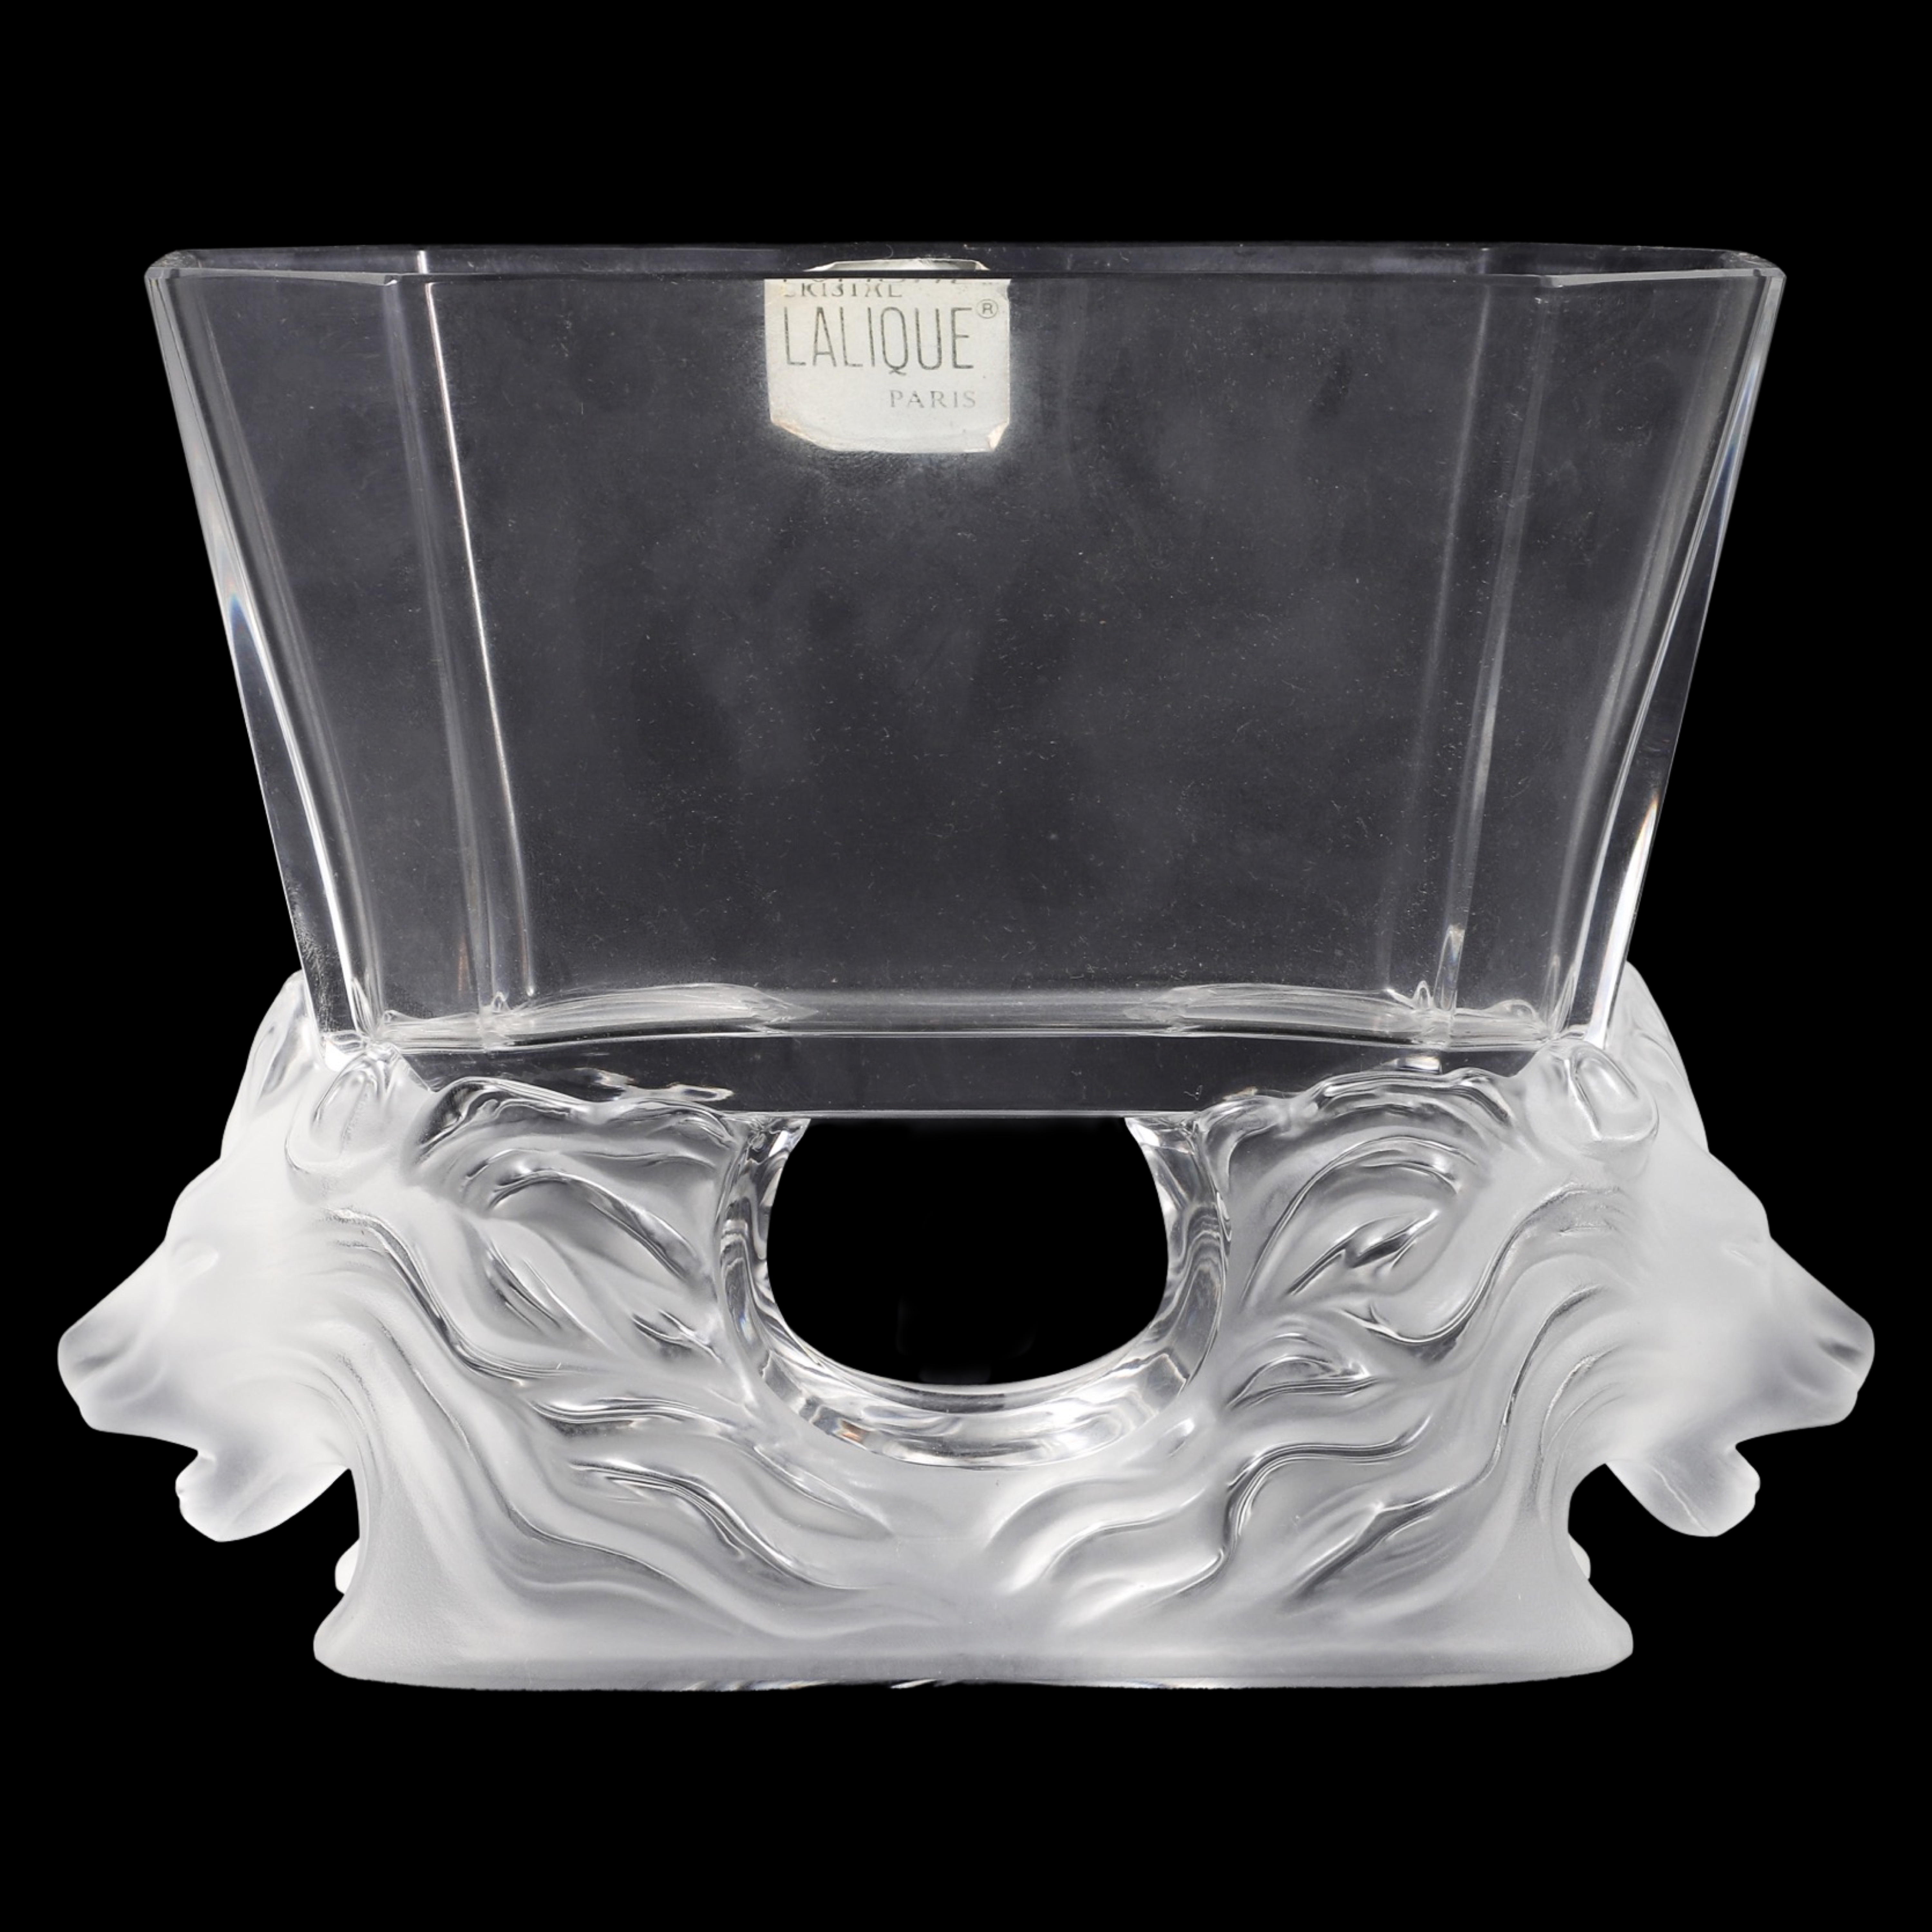 Lalique crystal Venise vase, on